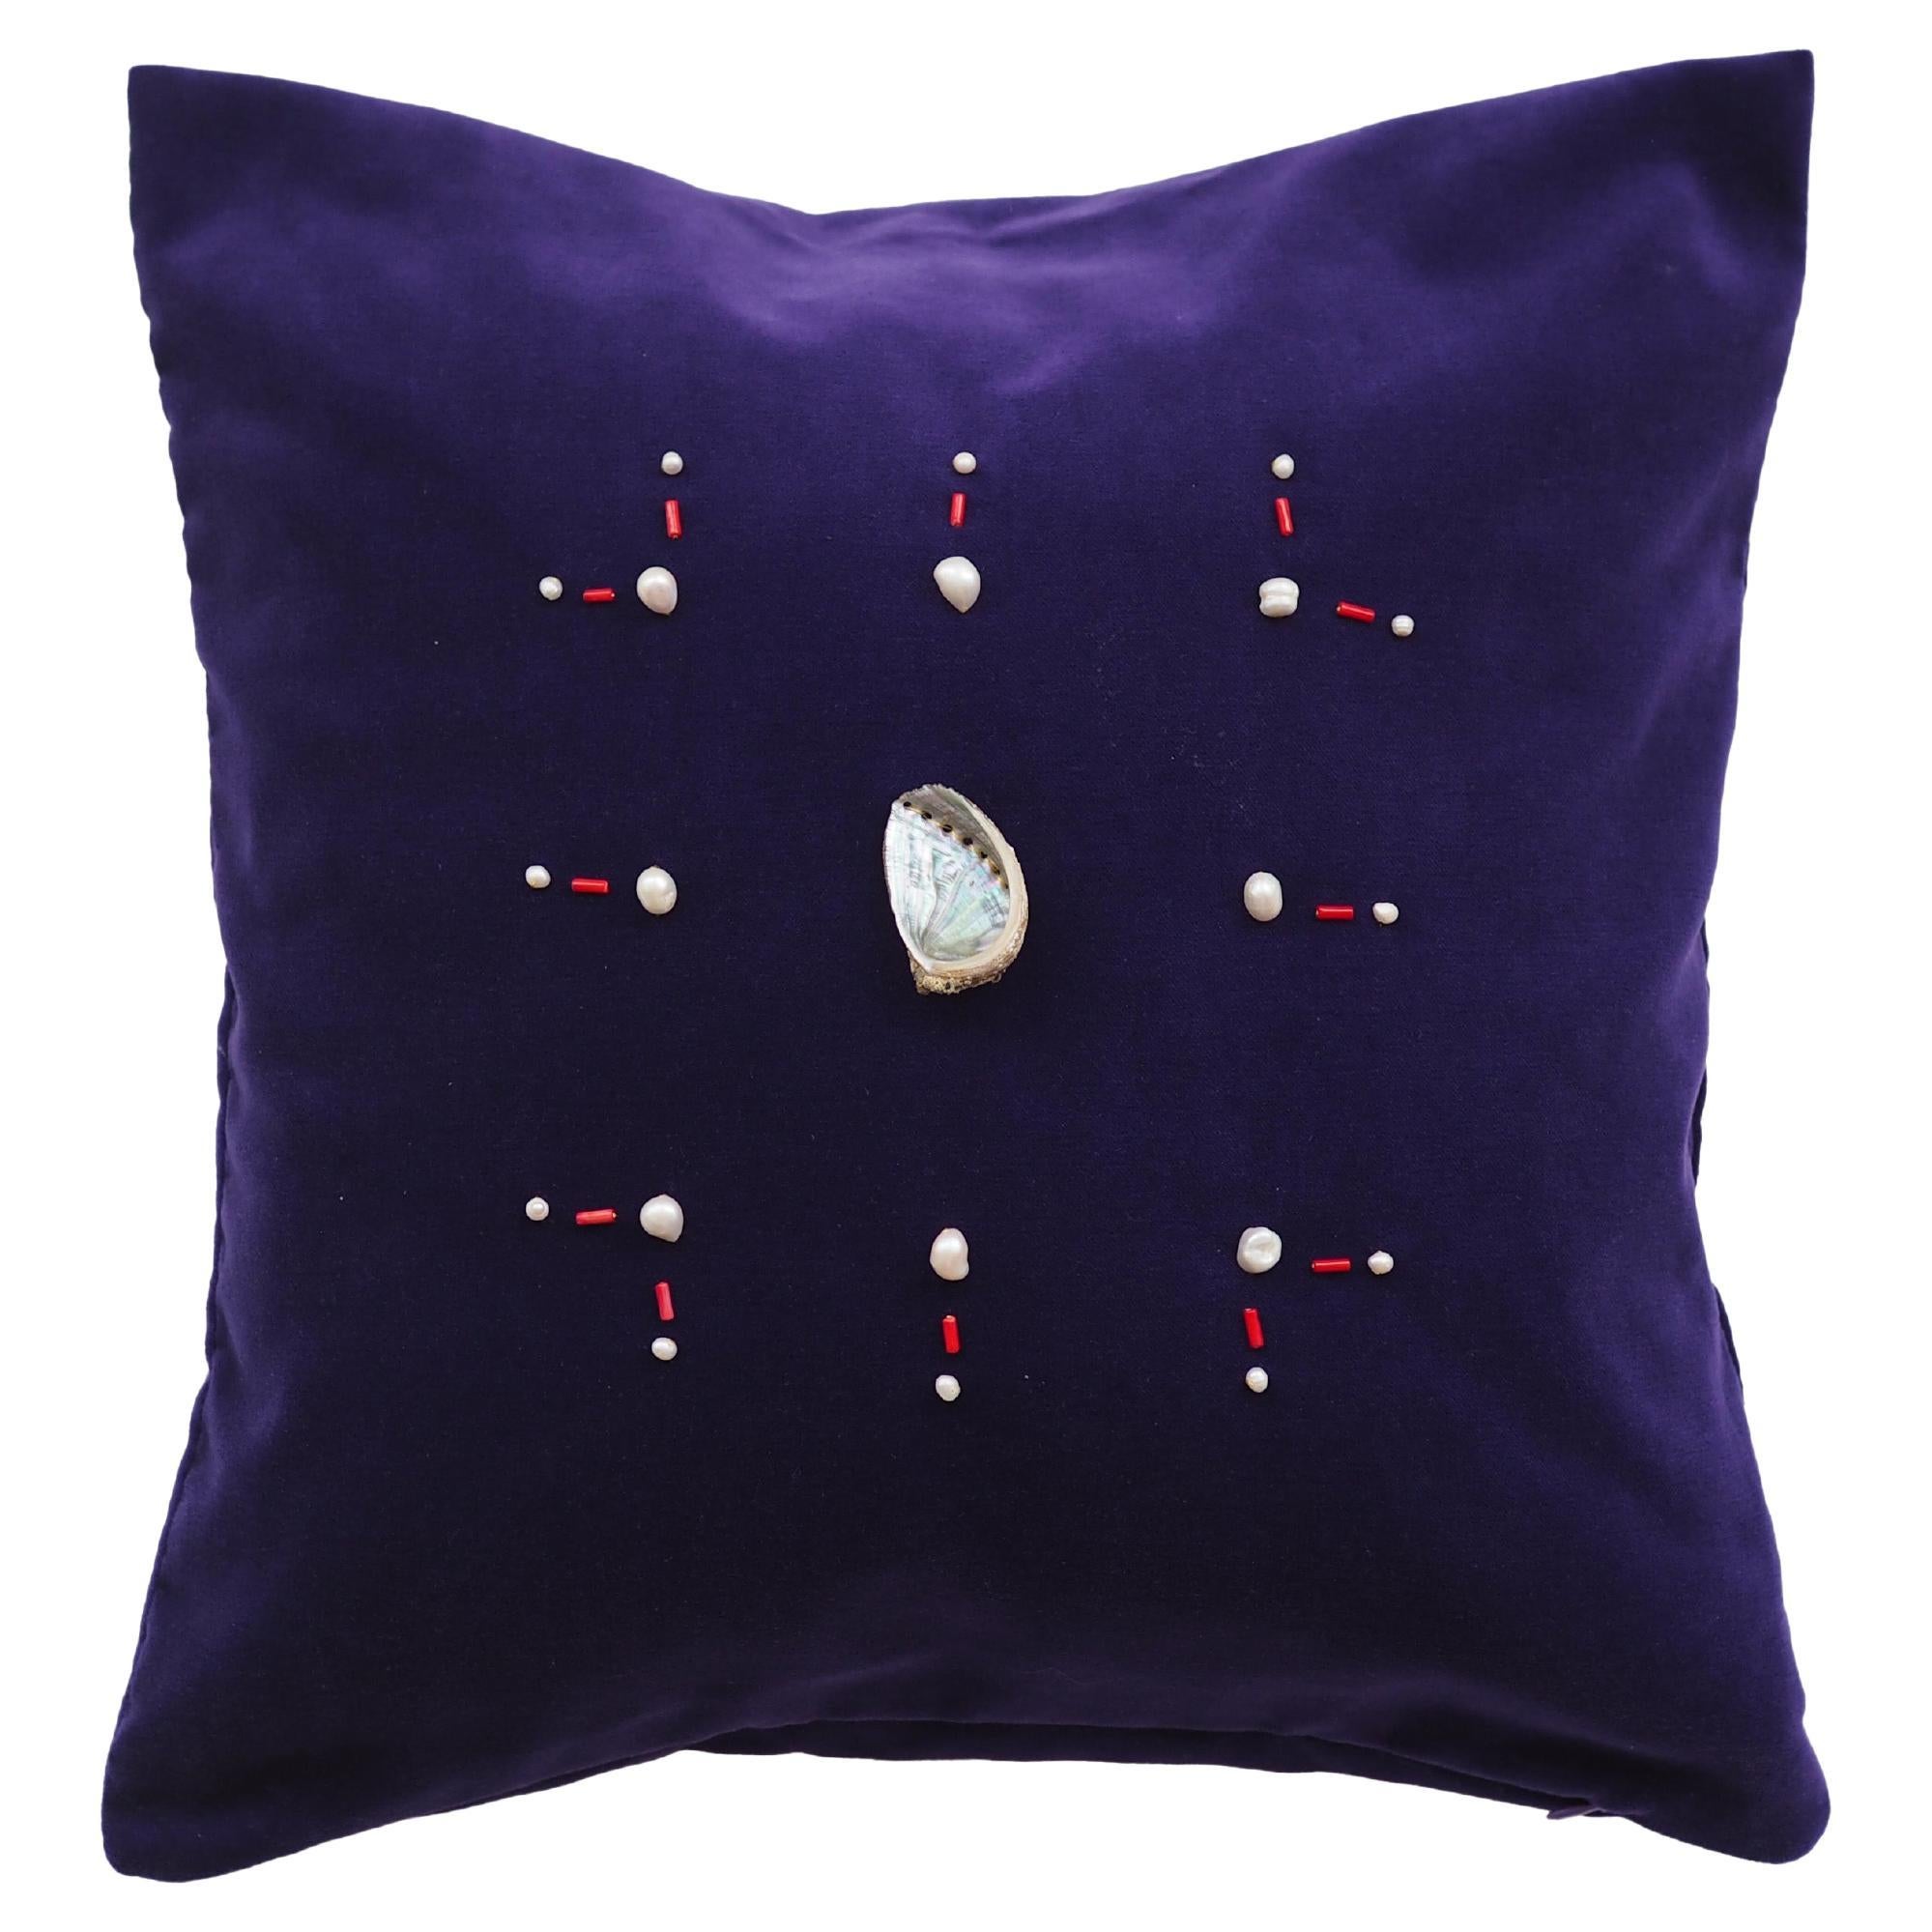 Bon Appetit 008 Decorative Cushion Culto Ponsoda 21st century desingn For Sale